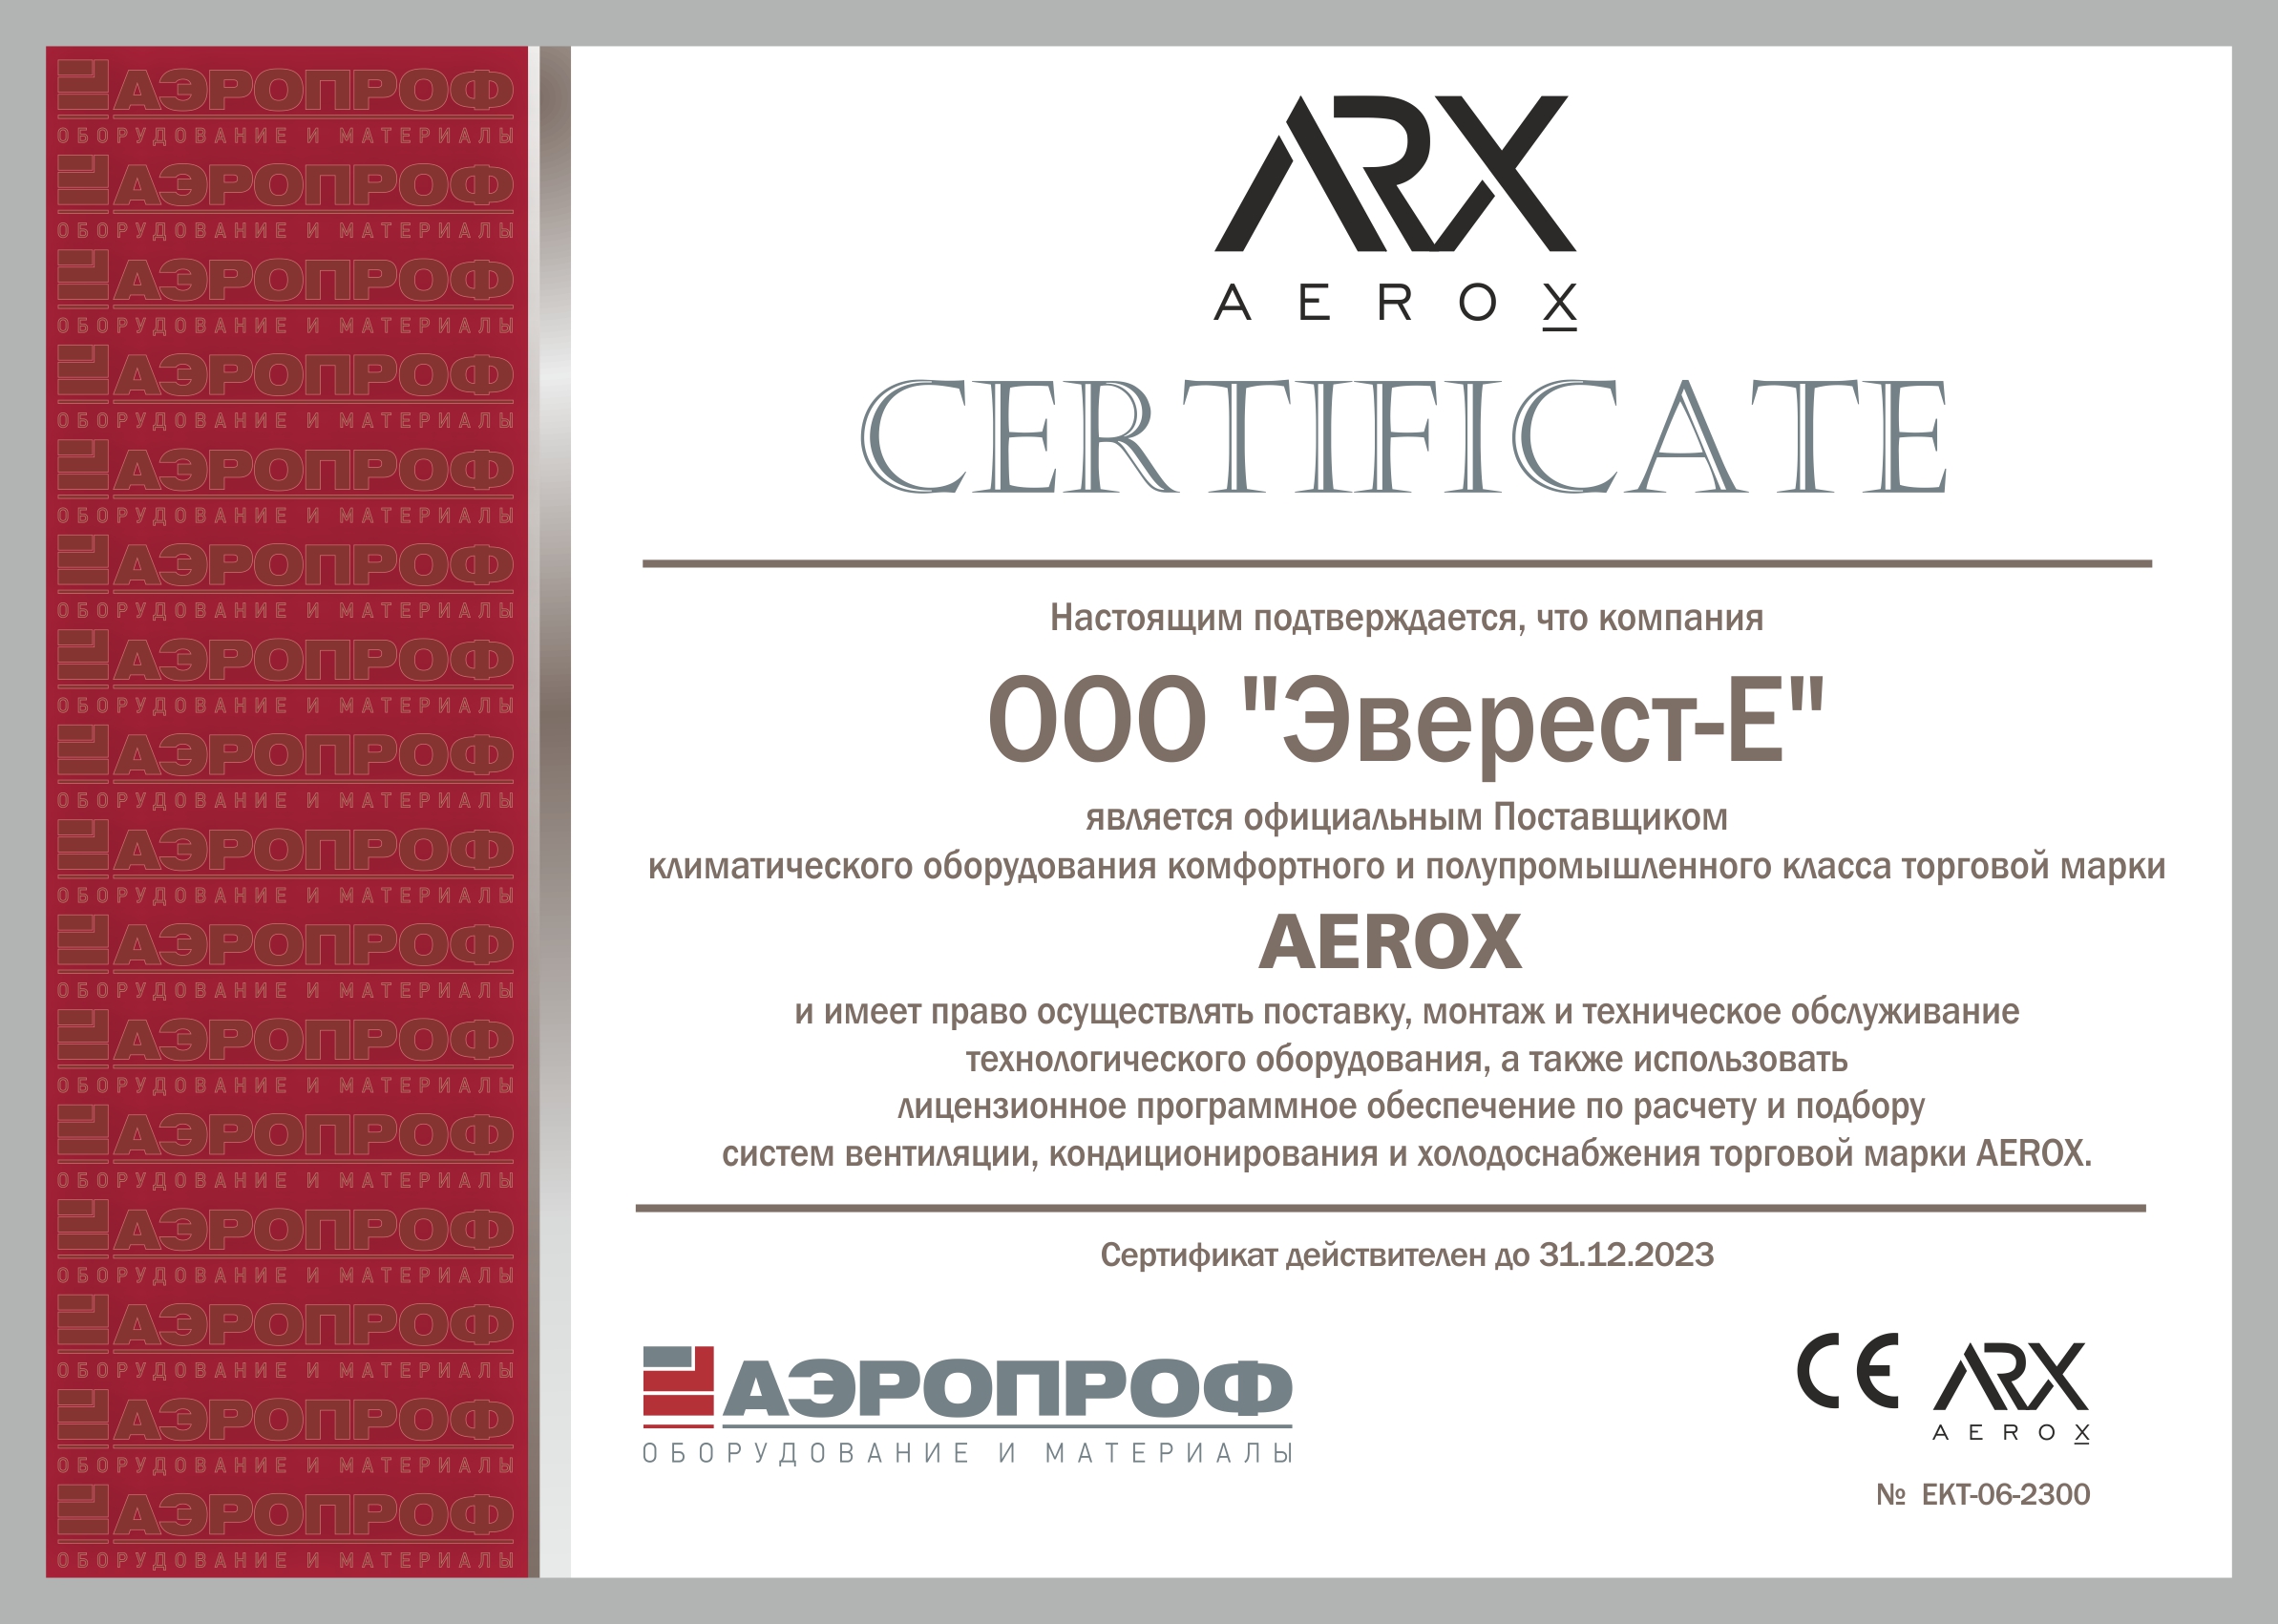 sert23-everest-arx Kondicioner Aero ALRS-09IH3A-02/ALRS-09OH3A-02 kypit v Ekaterinbyrge v internet-magazine KlimatMarket96.ry Сертификат официального дилера